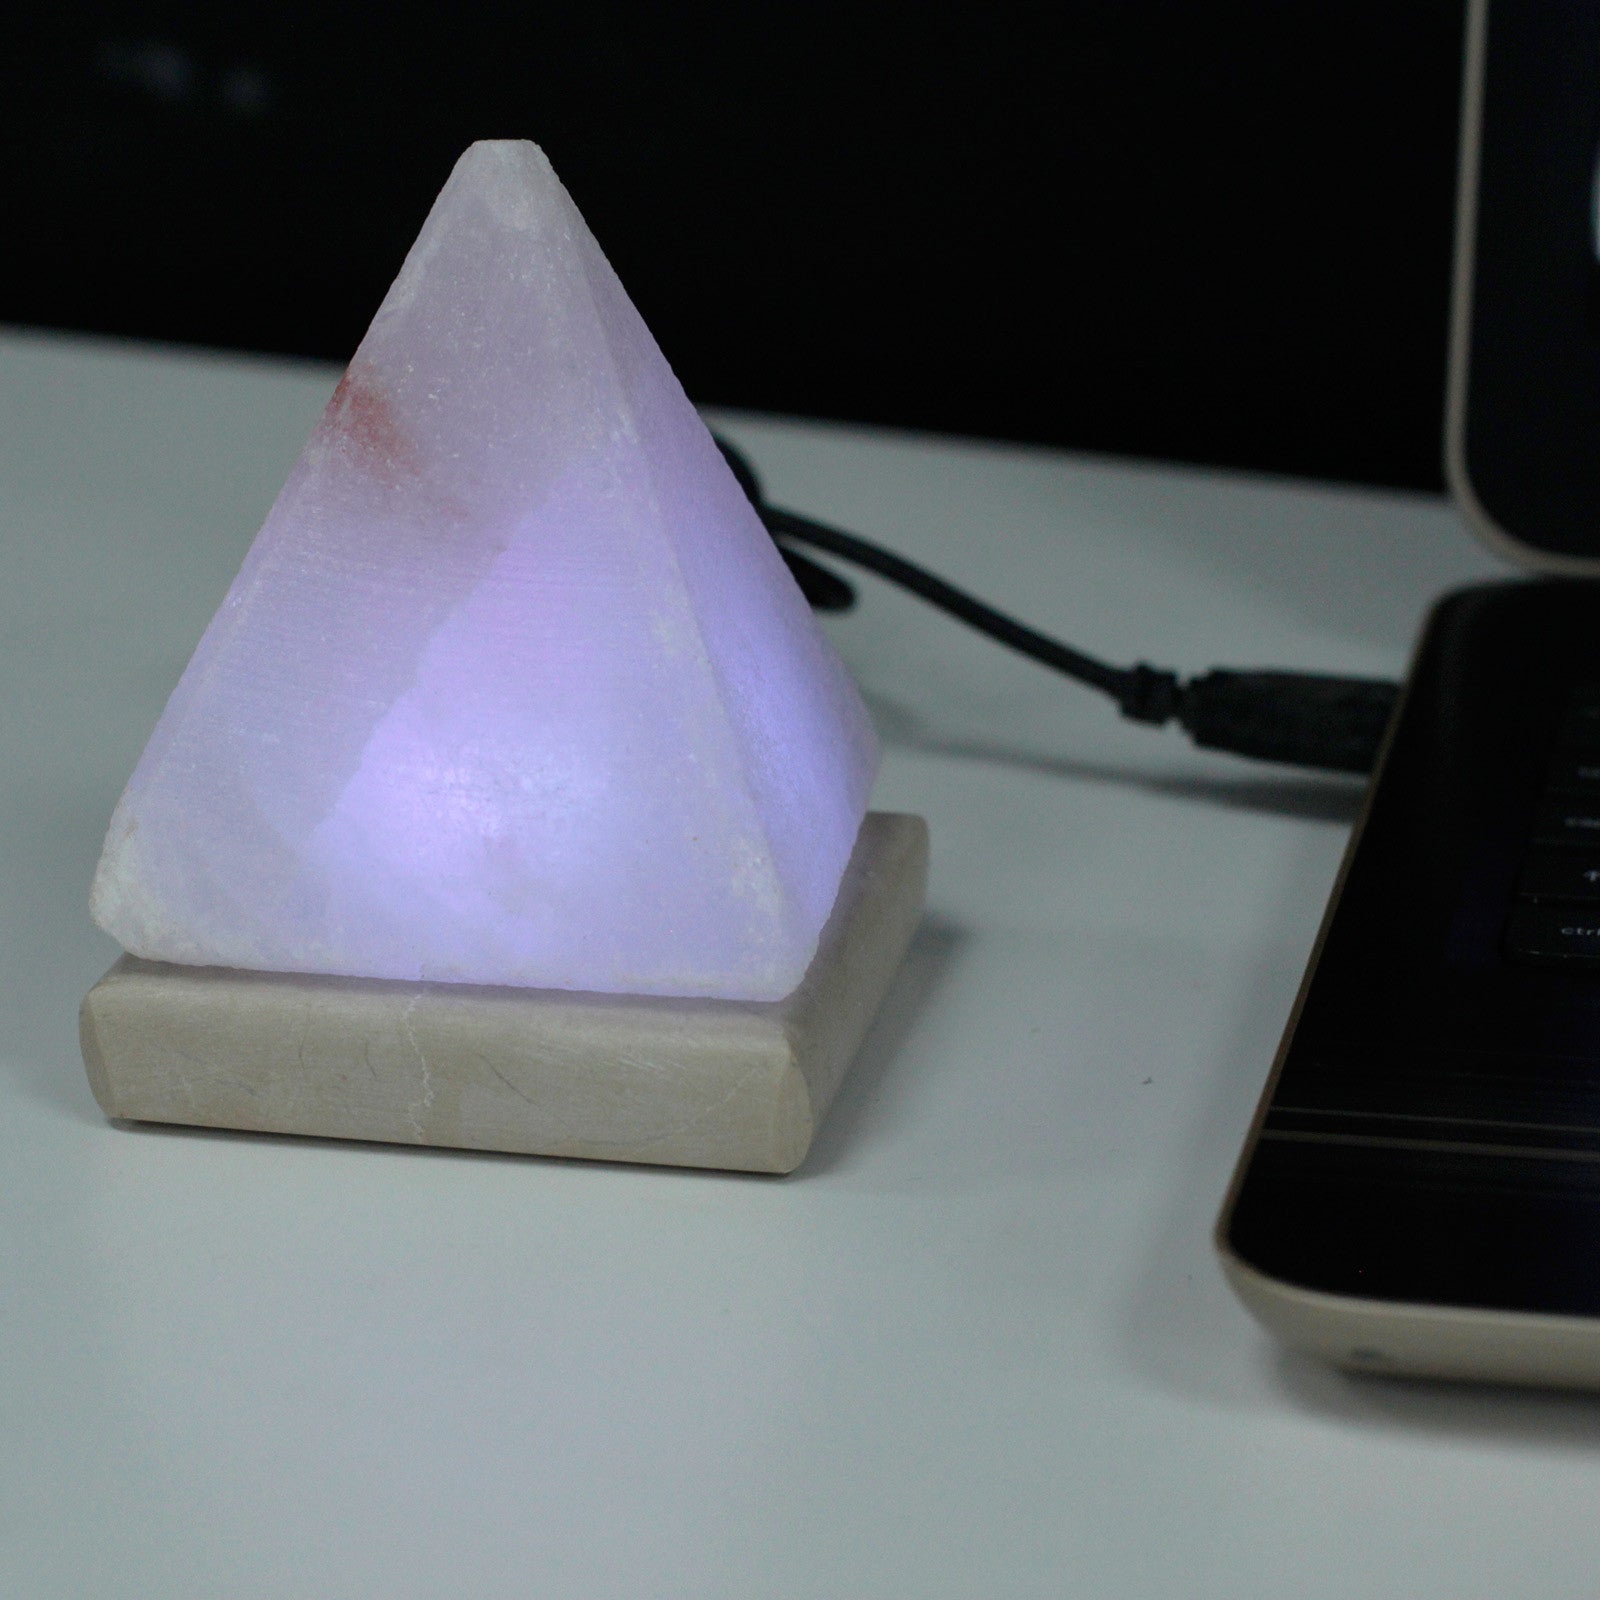 View Quality USB Pyramid WHITE Salt Lamp 9 cm multi information